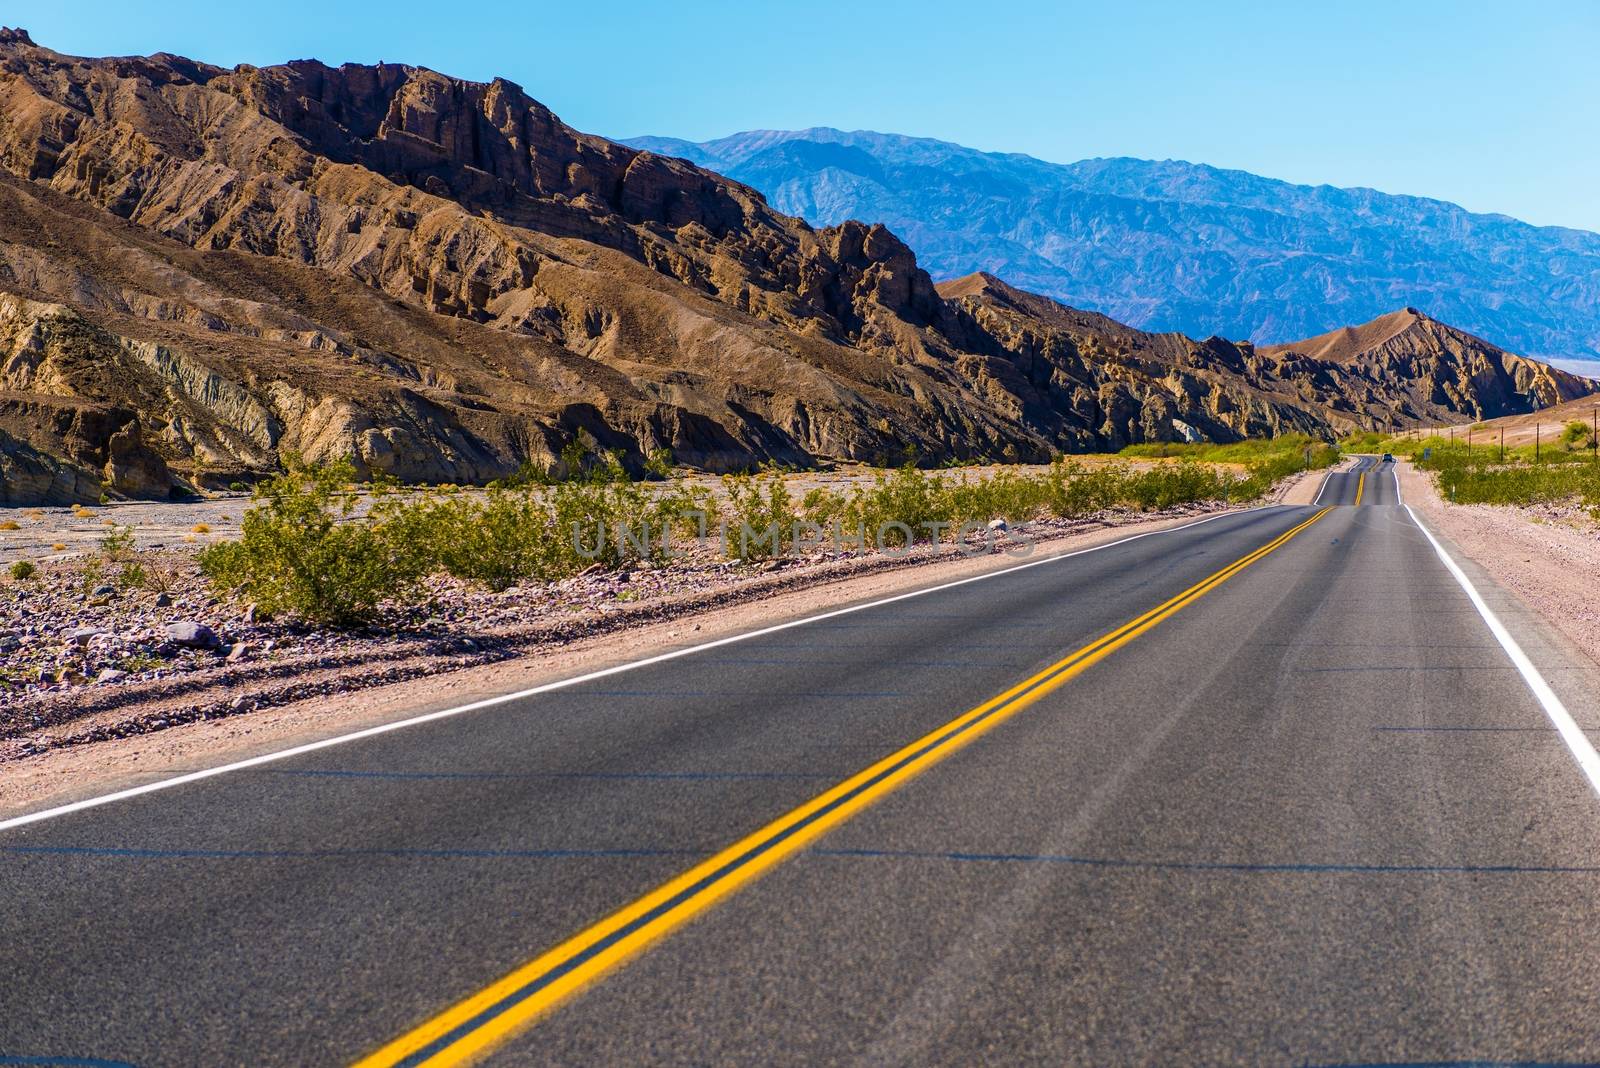 California Desert Highway by welcomia